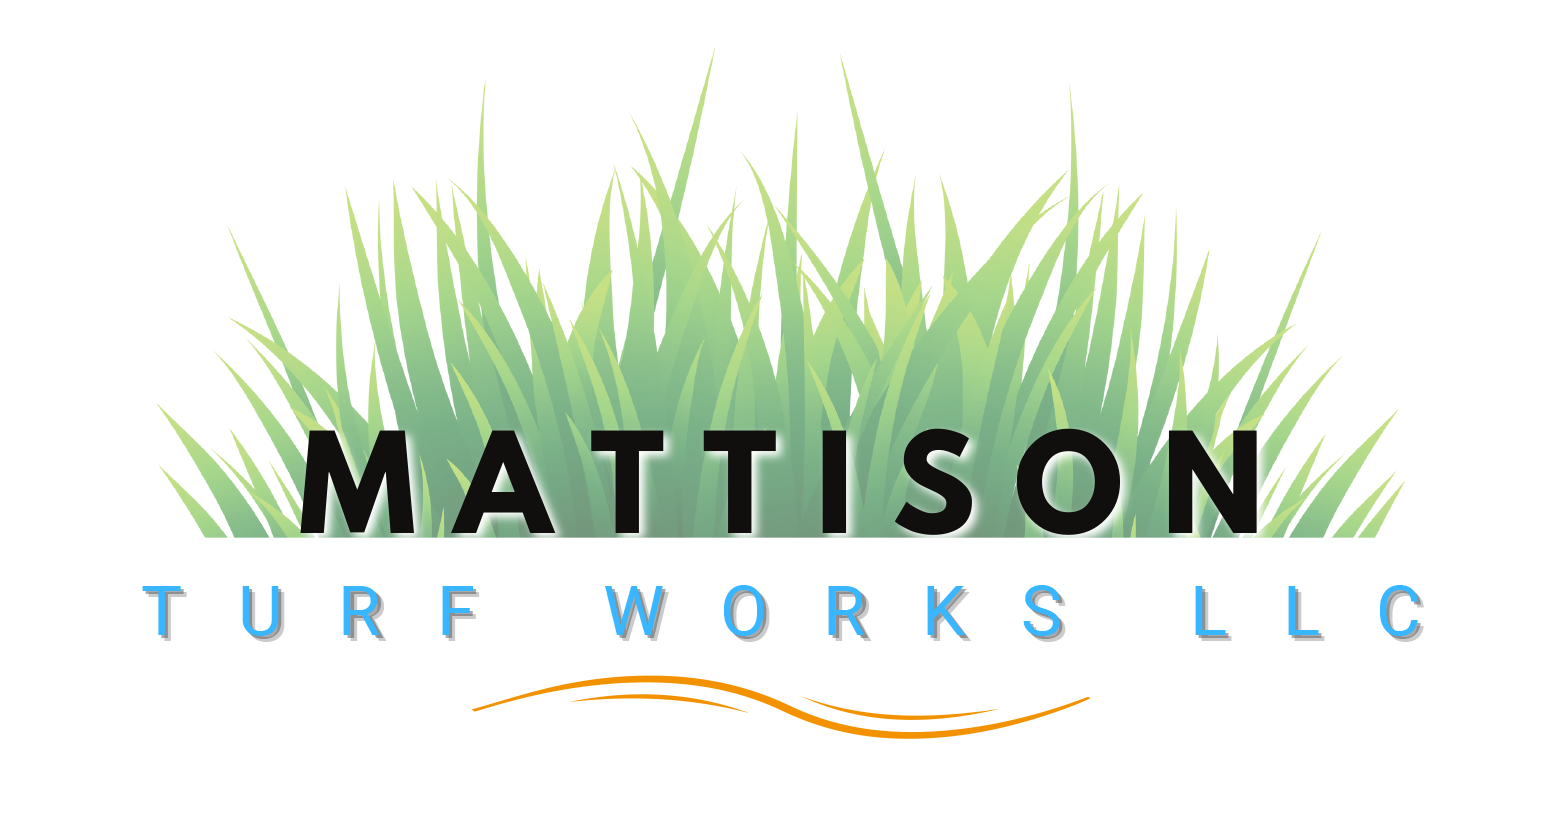 Mattison Turf Works, LLC